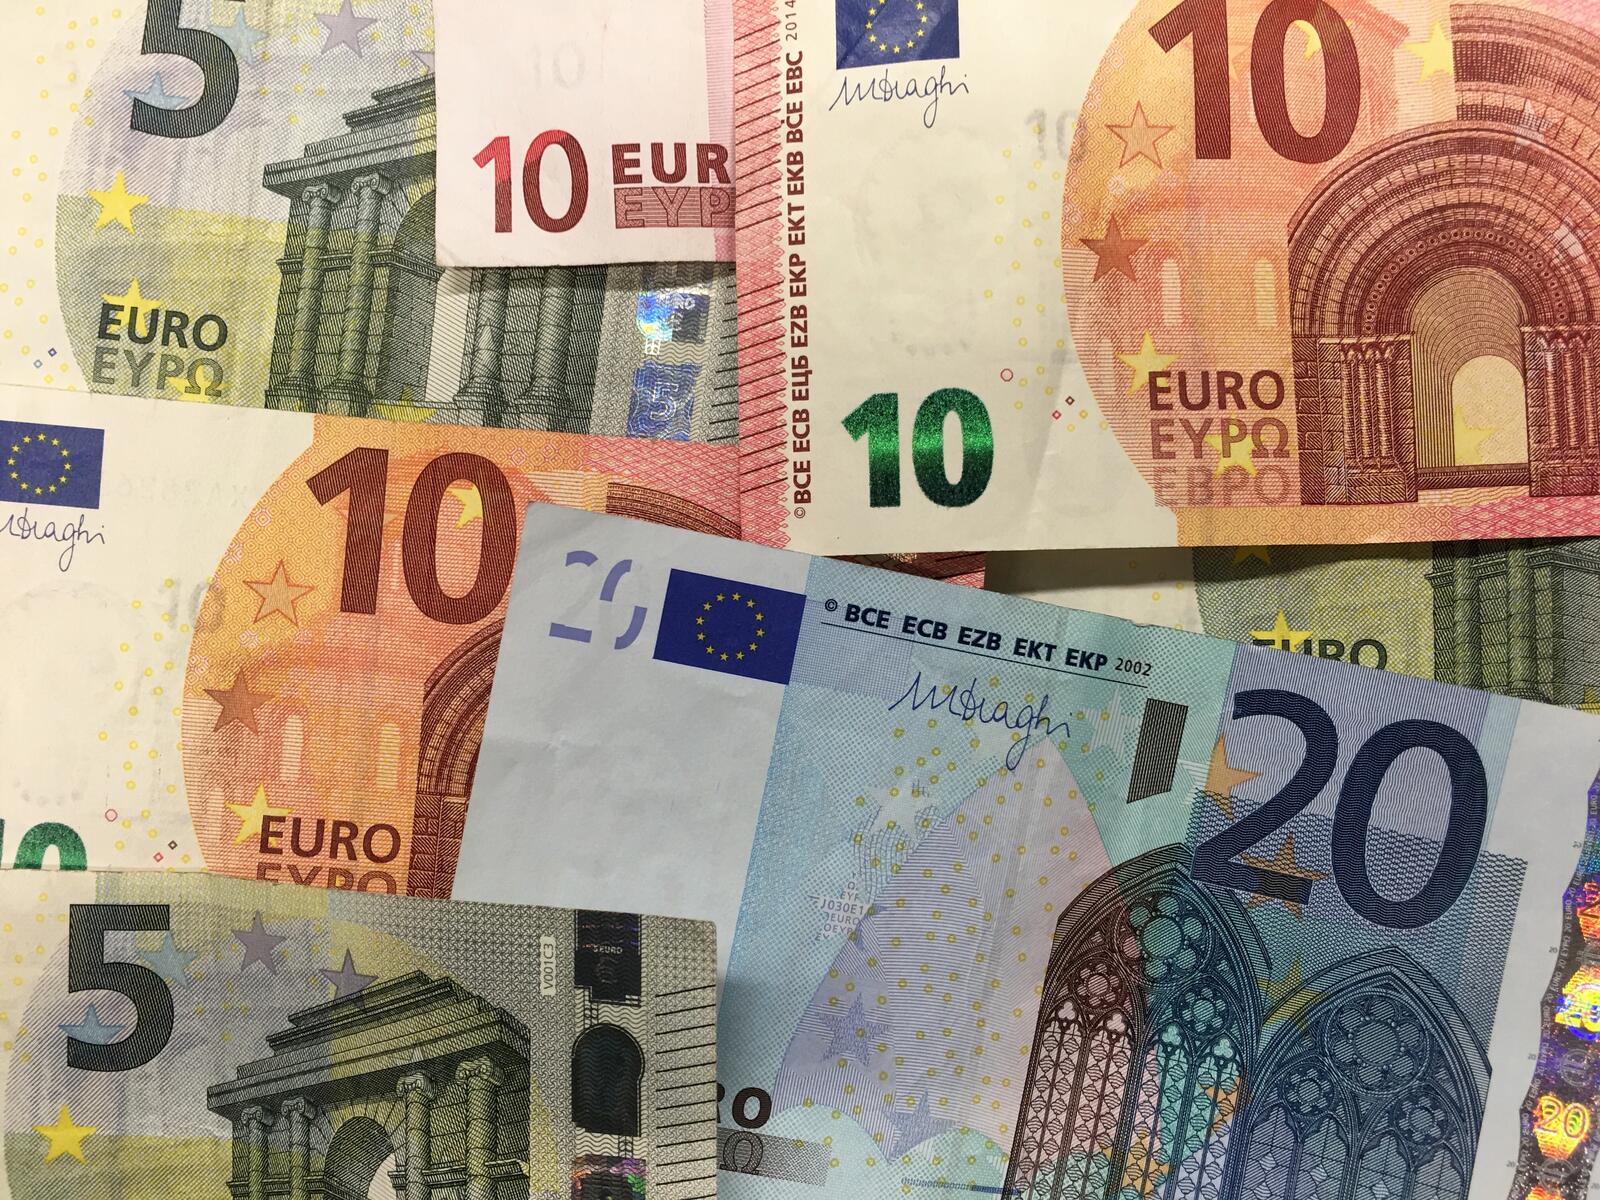 10 Евро купюра. Евро валюта купюра. Изображение банкнот евро. Евро фото. Образцы евро купюр